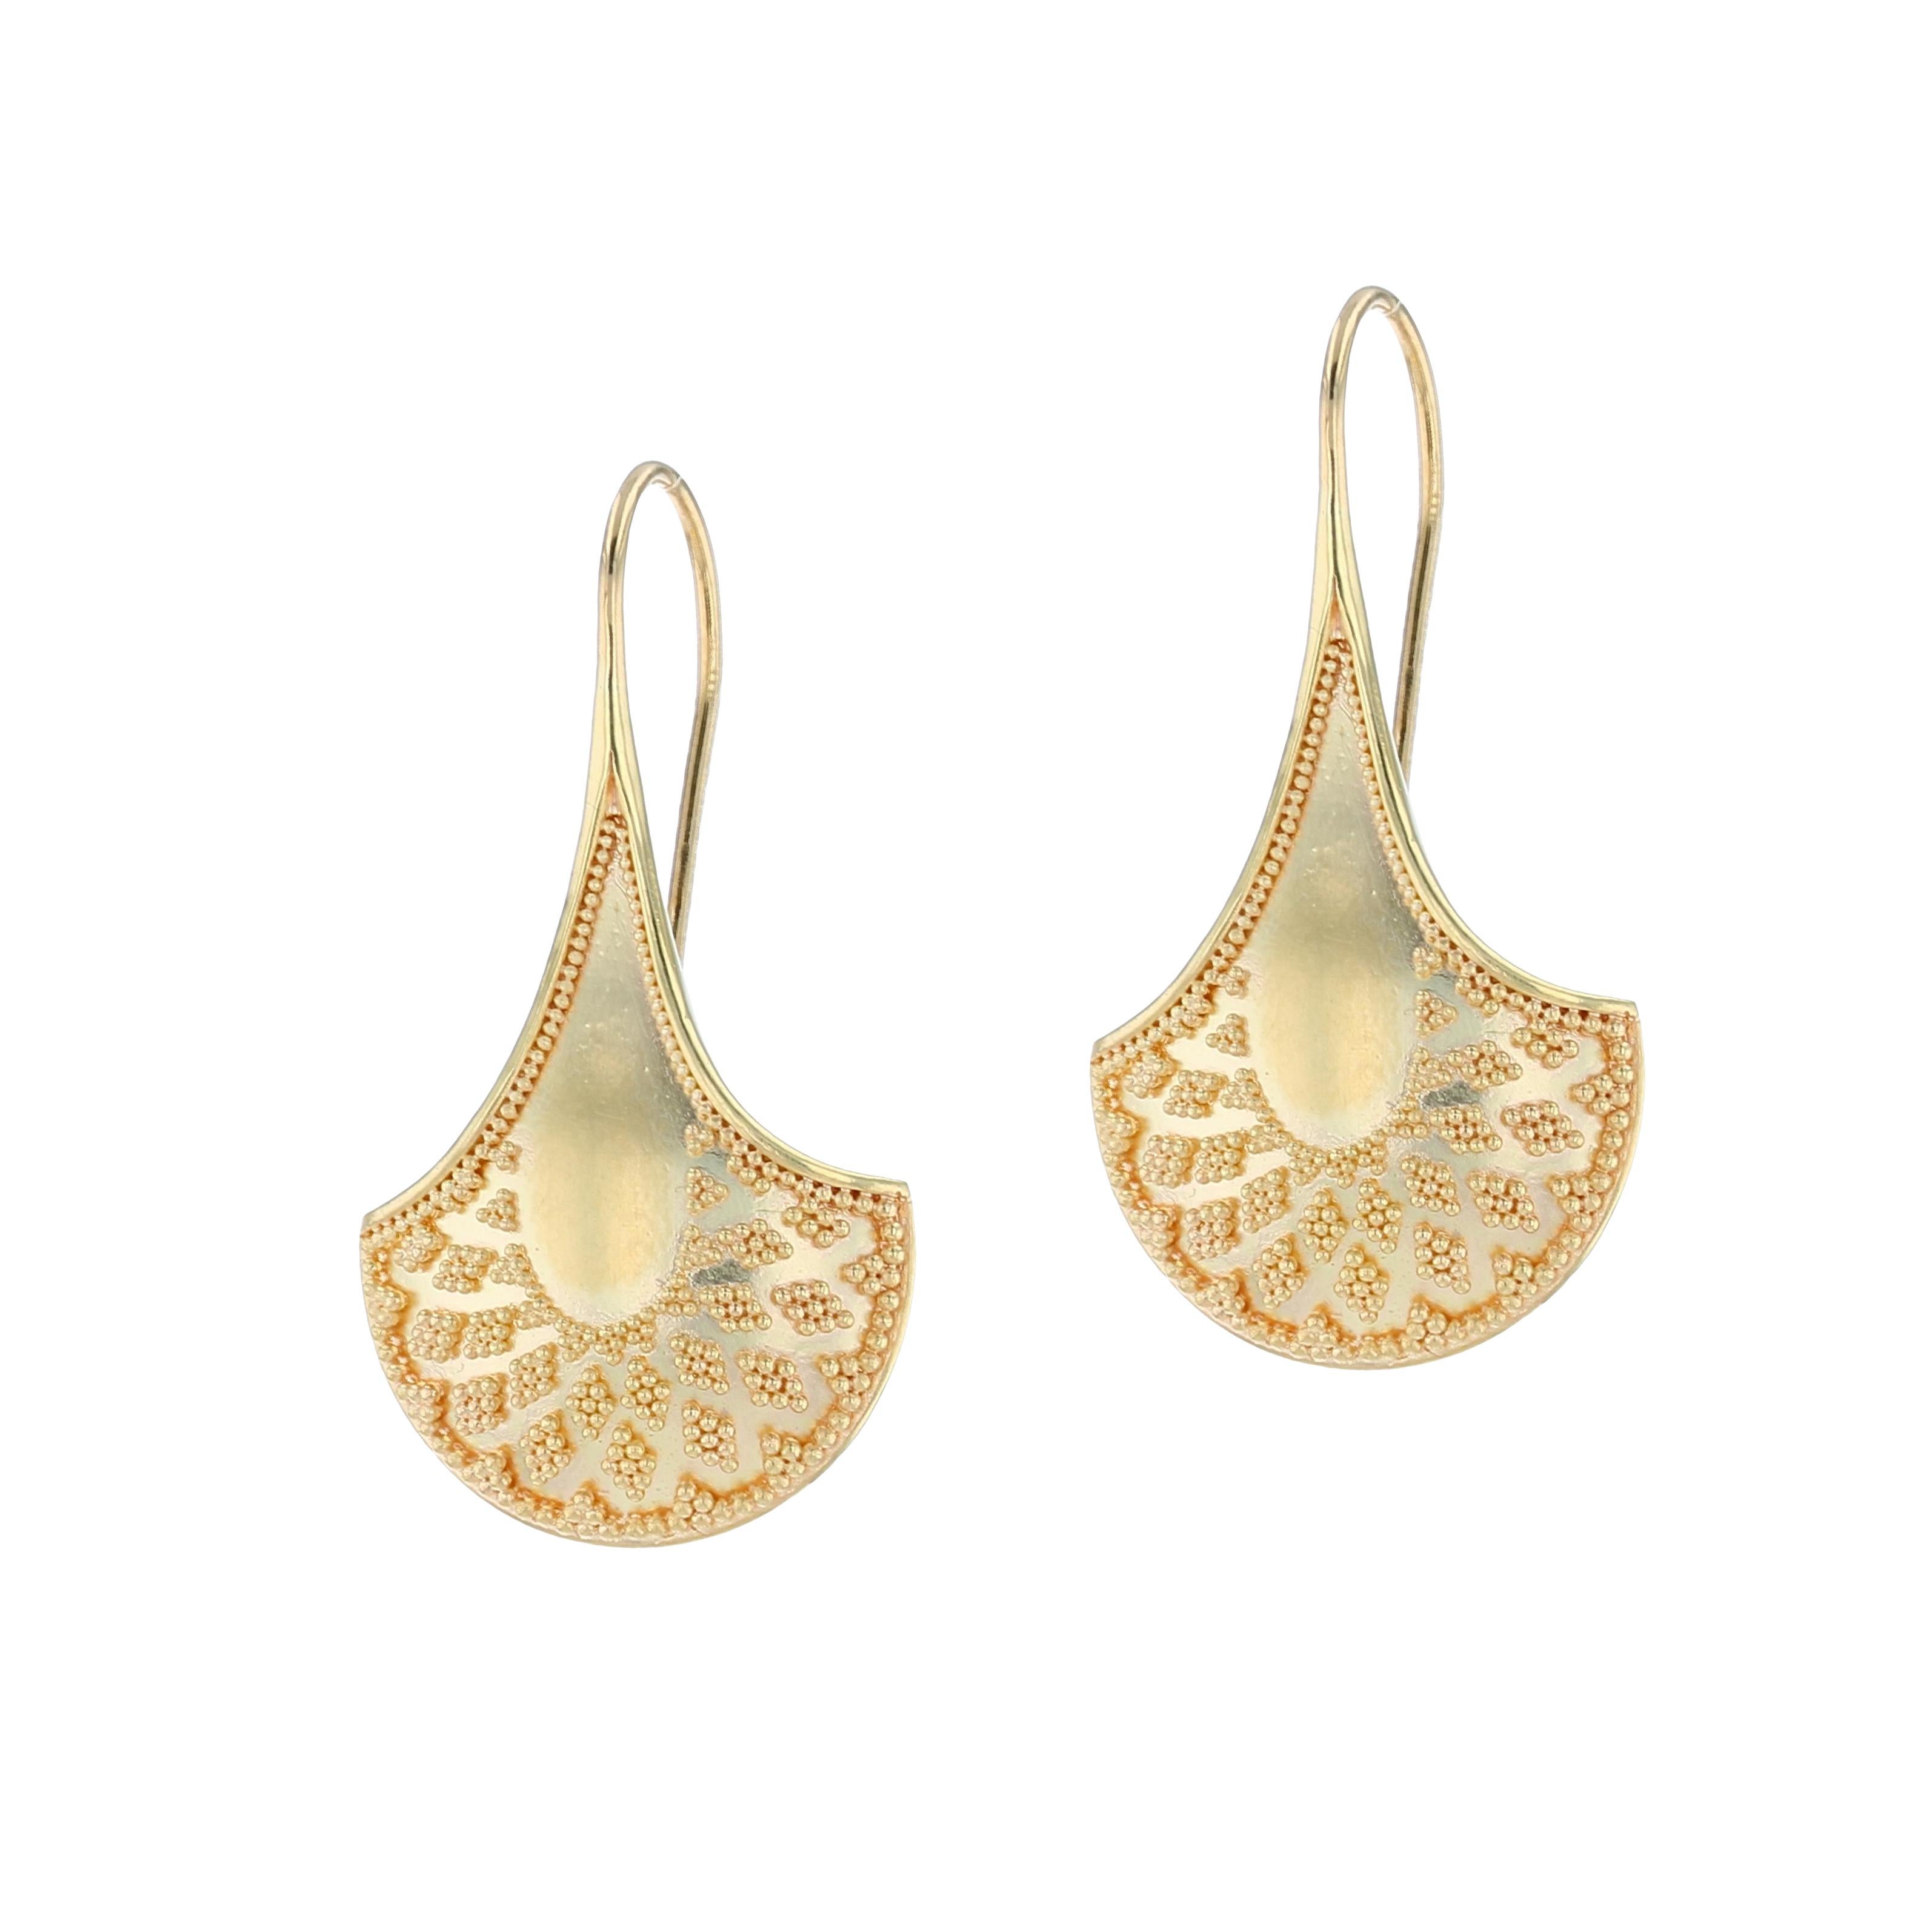 Artisan Kent Raible's 18 Karat Gold 'Fan' Dangle Earrings with fine Granulation For Sale